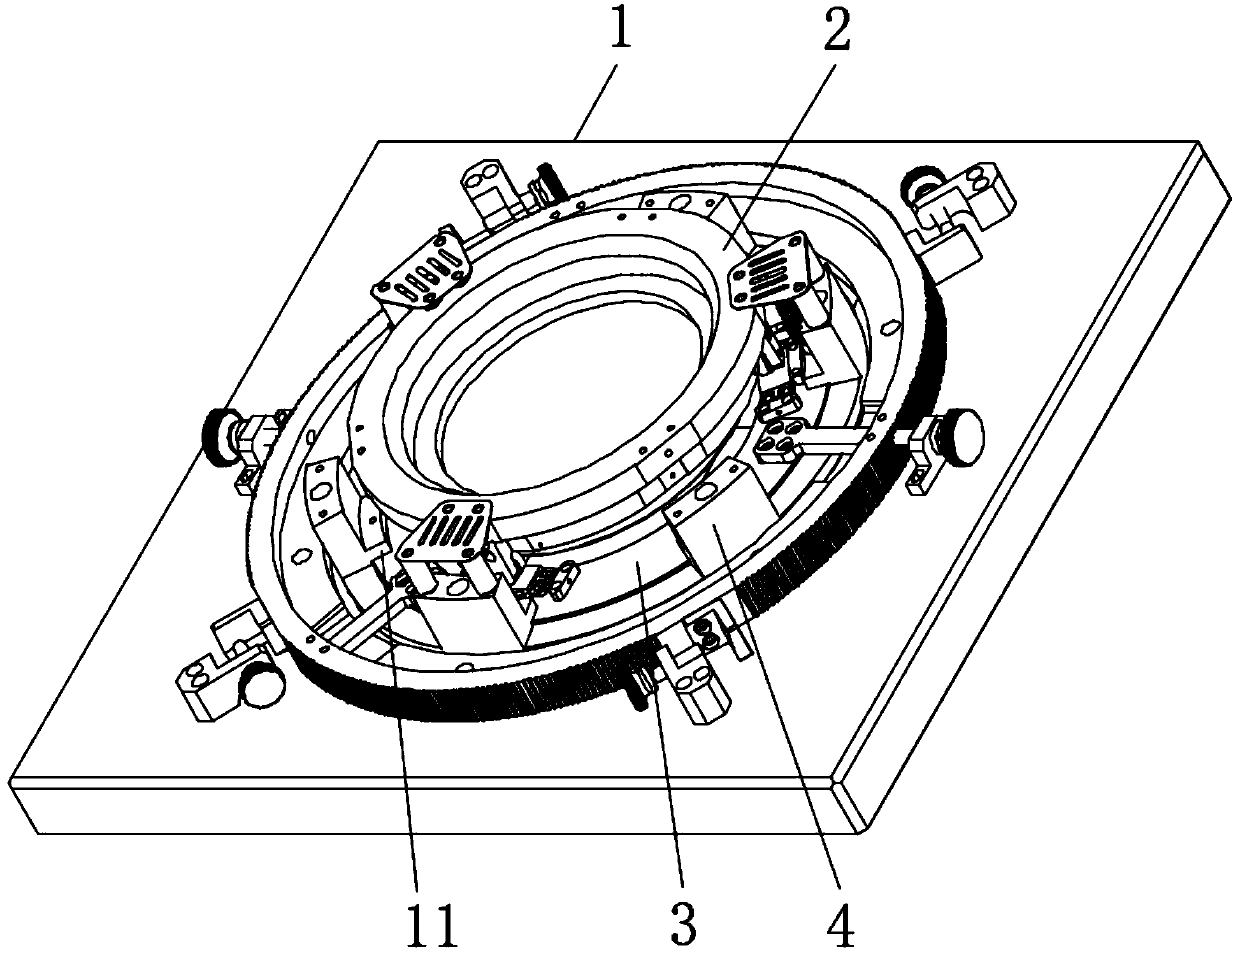 A high-precision de-eccentric focusing mechanism suitable for general optical systems